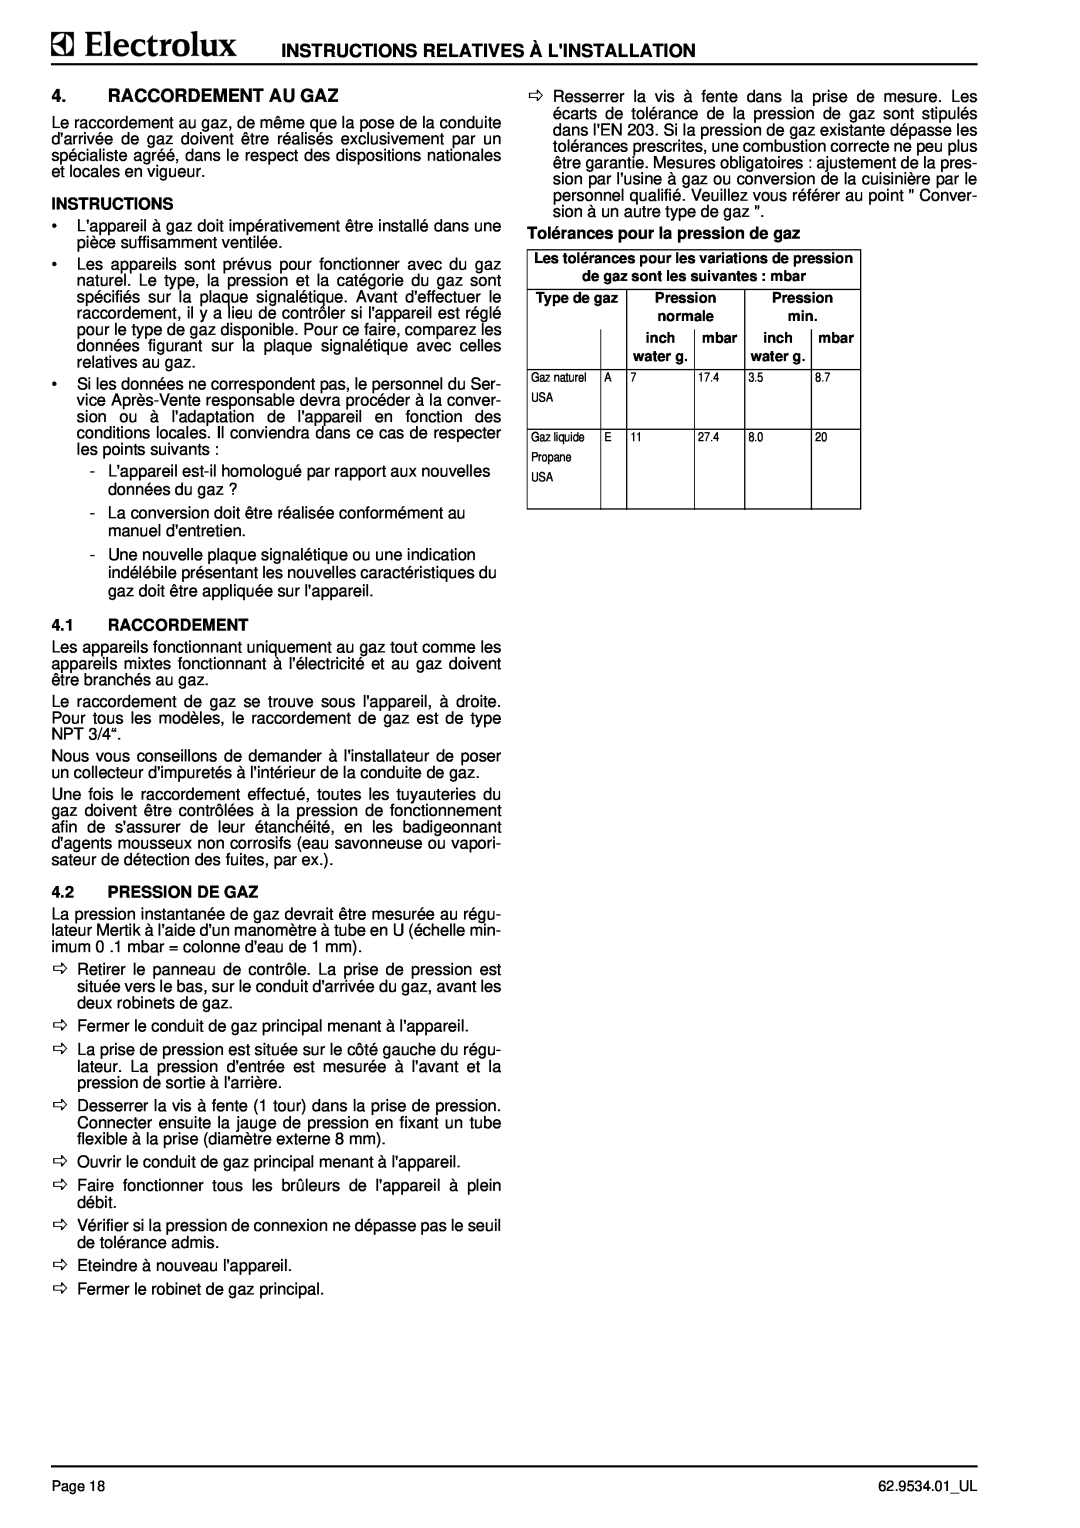 Electrolux 9CHG584161 Instructions Relatives À Linstallation, Raccordement Au Gaz, 4.1RACCORDEMENT, 4.2PRESSION DE GAZ 